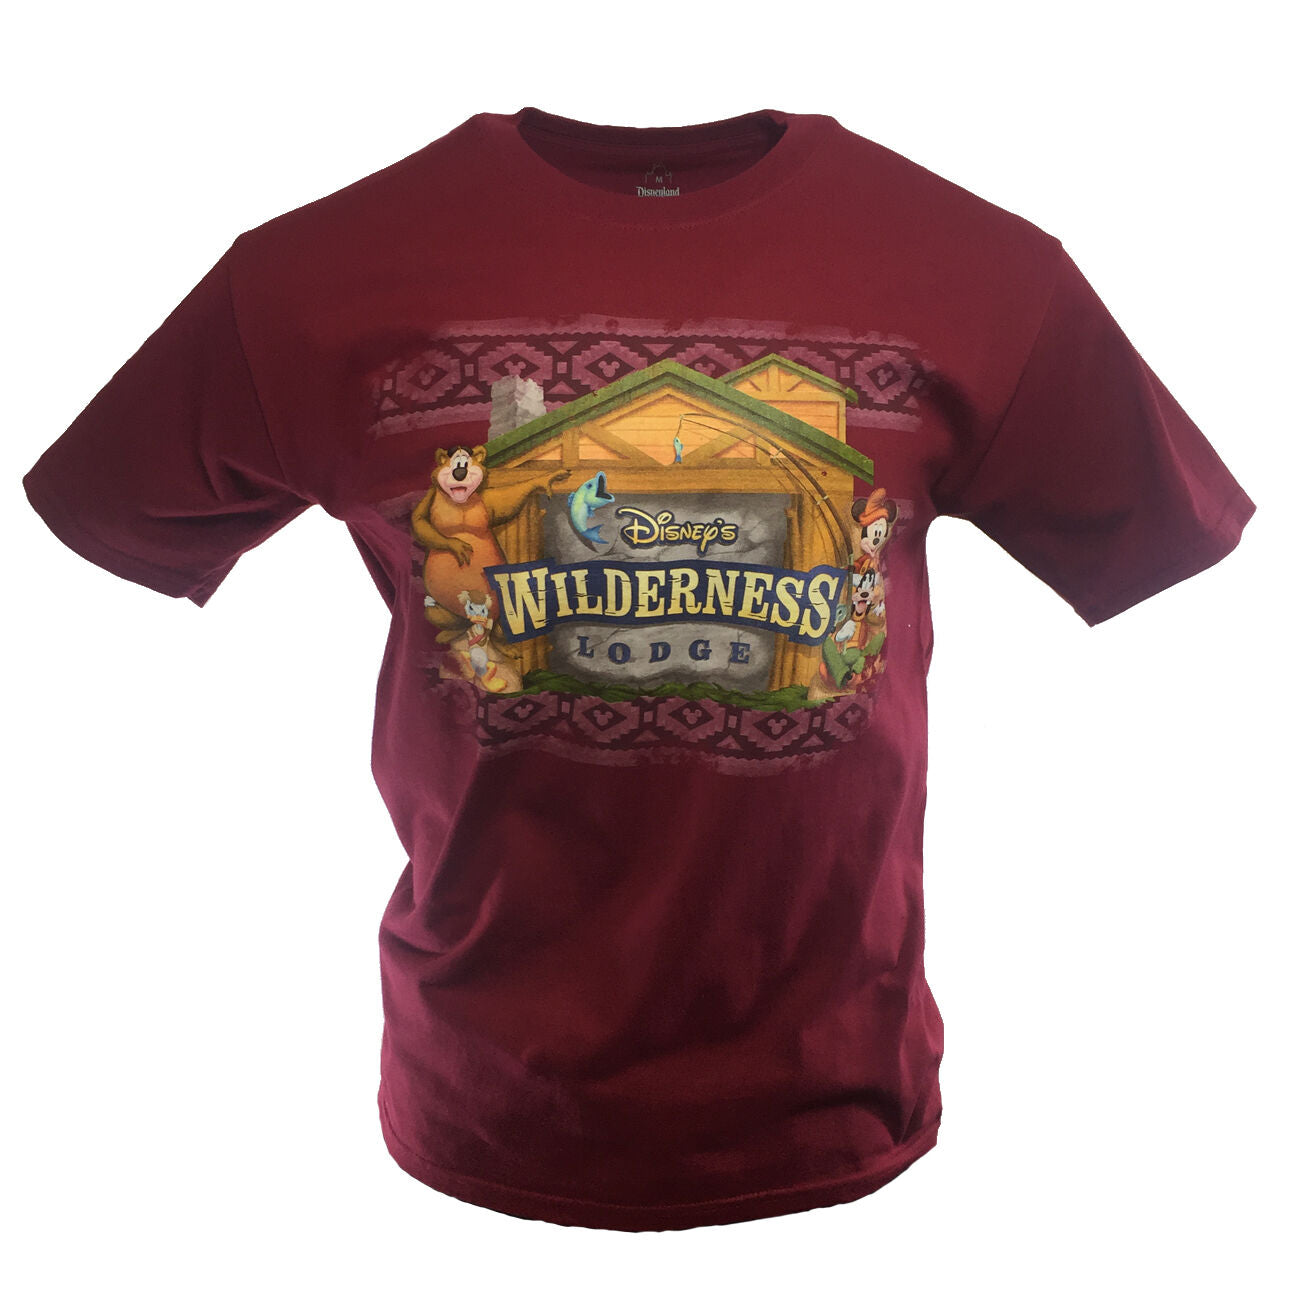 Disney's Wilderness Lodge Theme Park T-Shirt - Burgundy Mens/Unisex